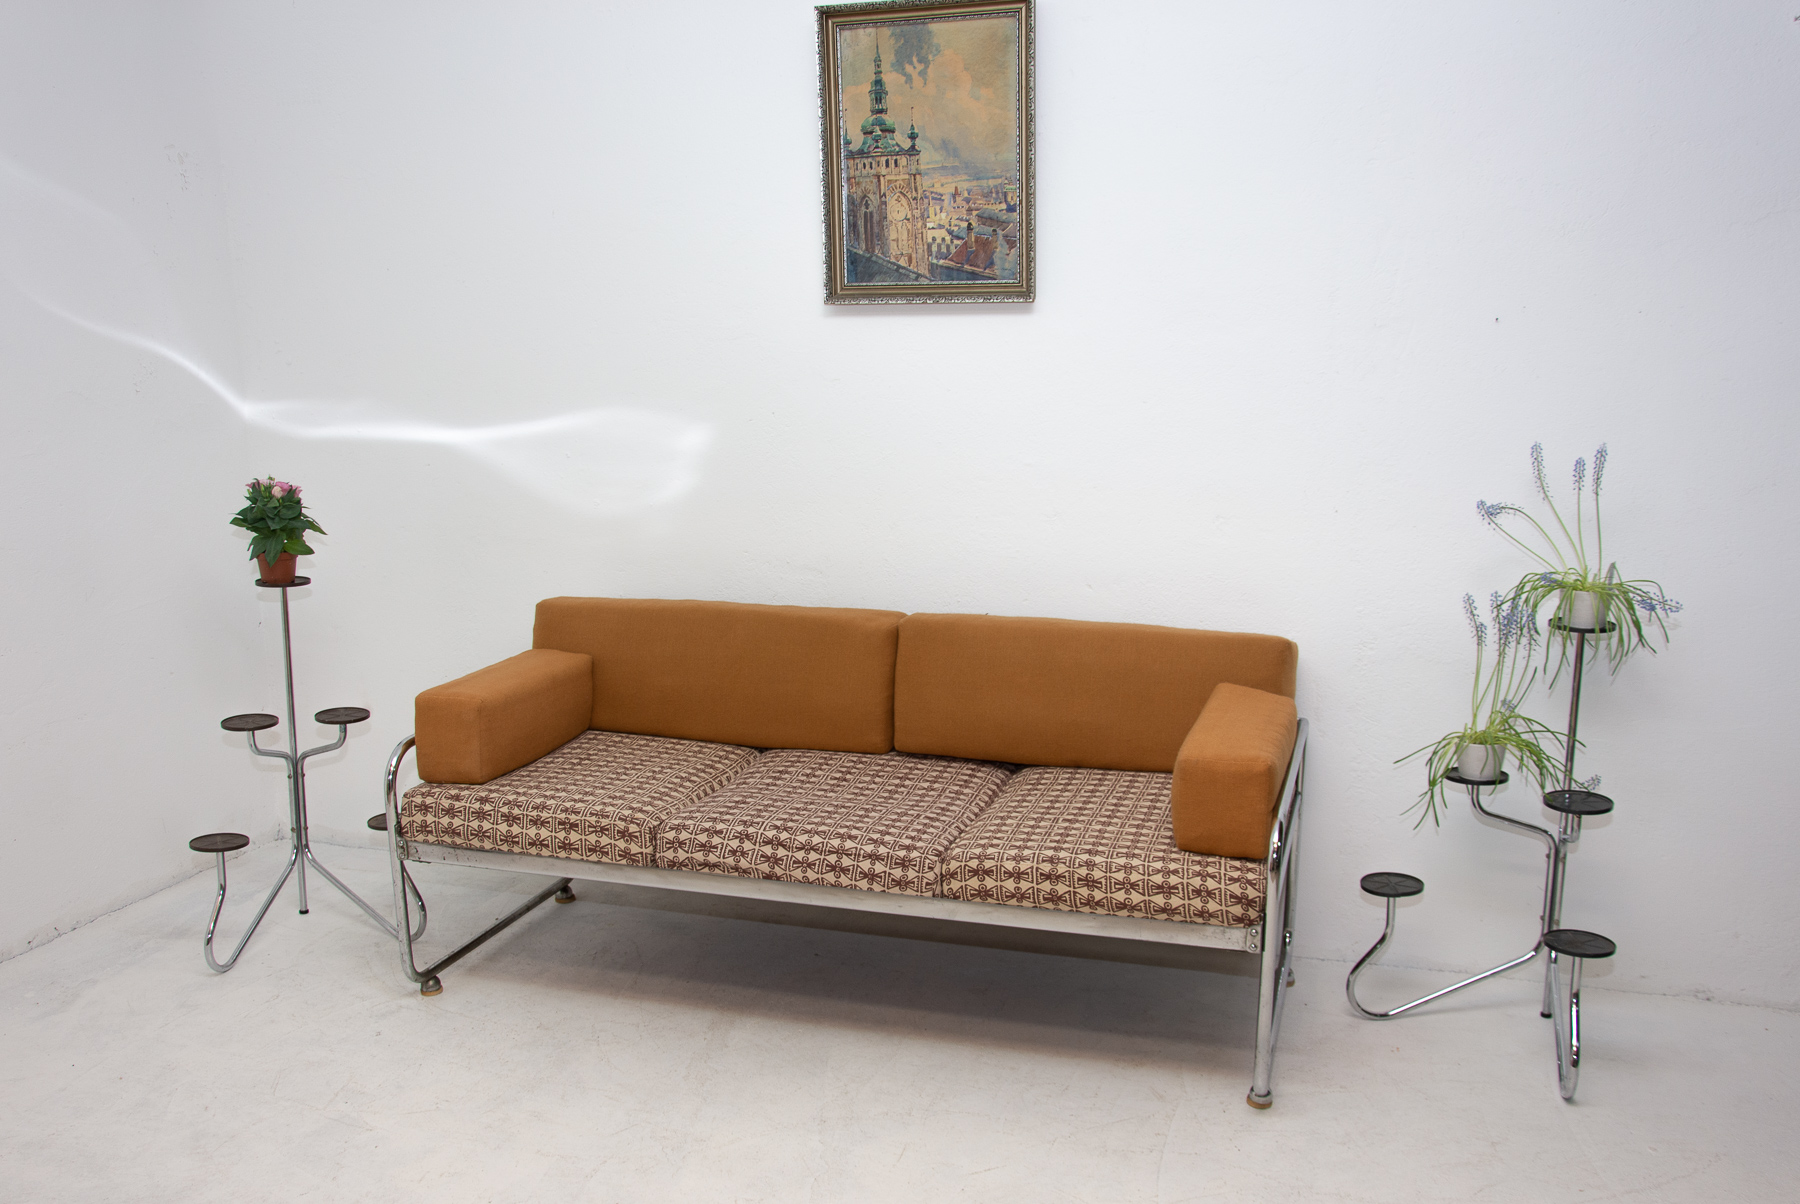 Chromium Plated Bauhaus Sofa By Robert